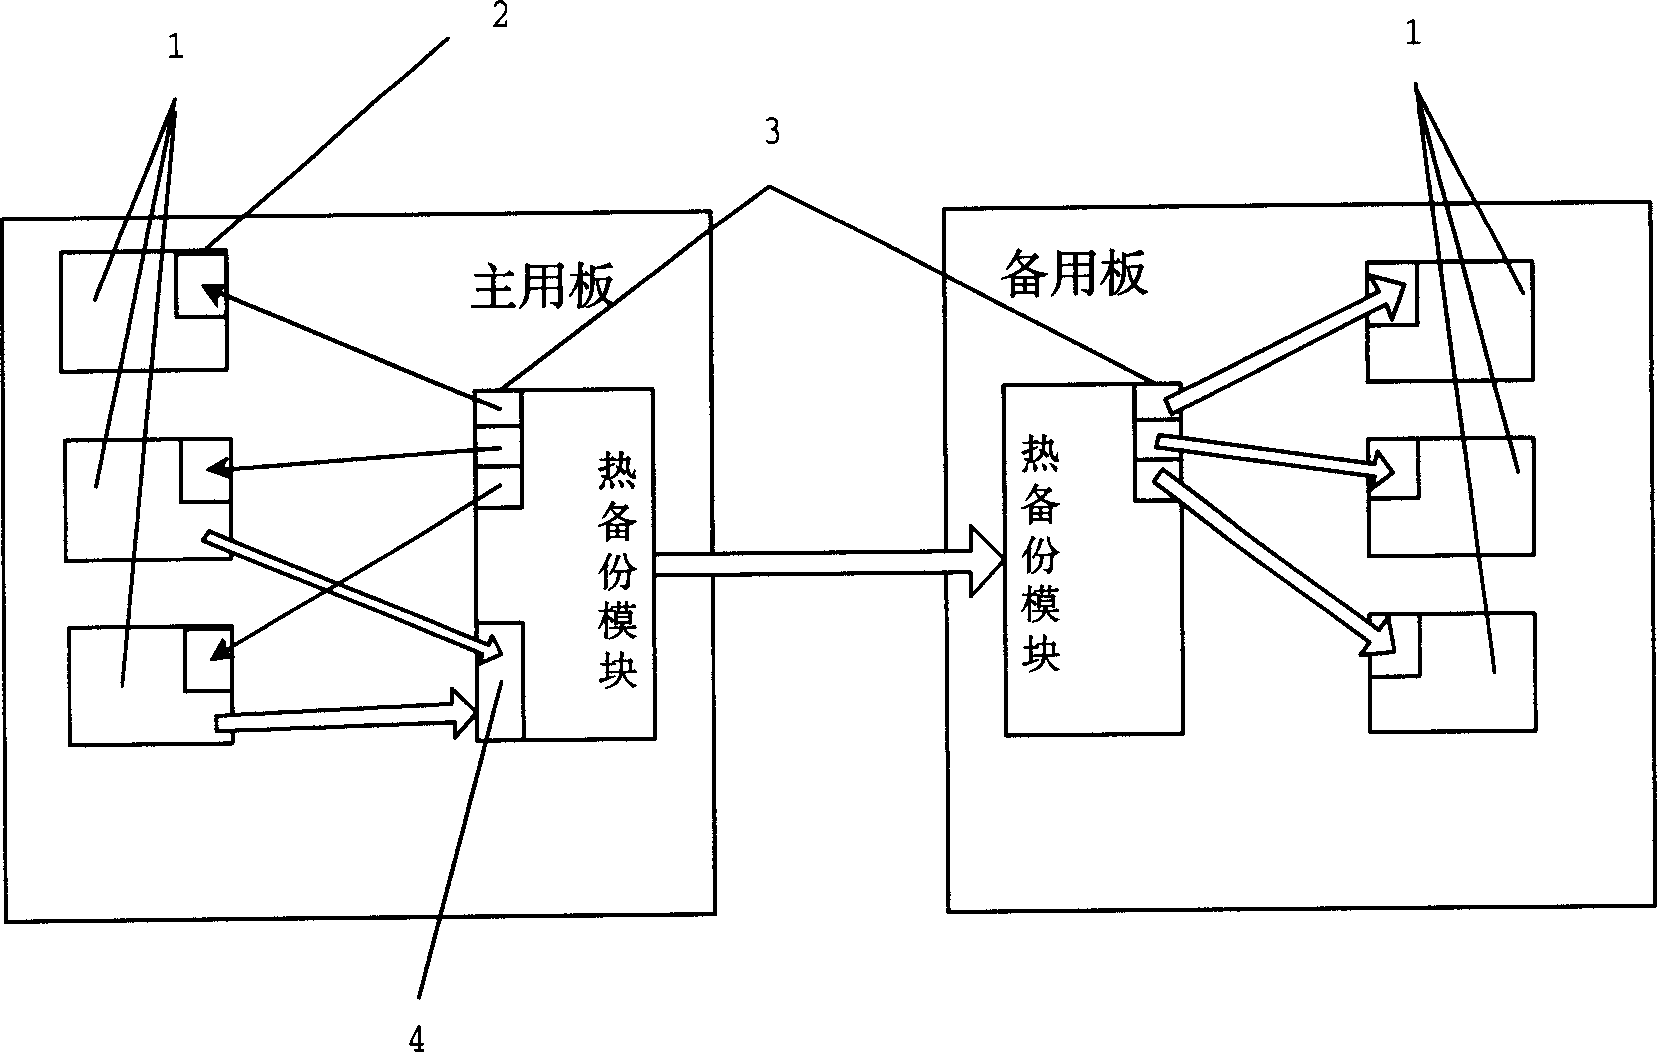 Method of realizing main control plate thermal redundancy